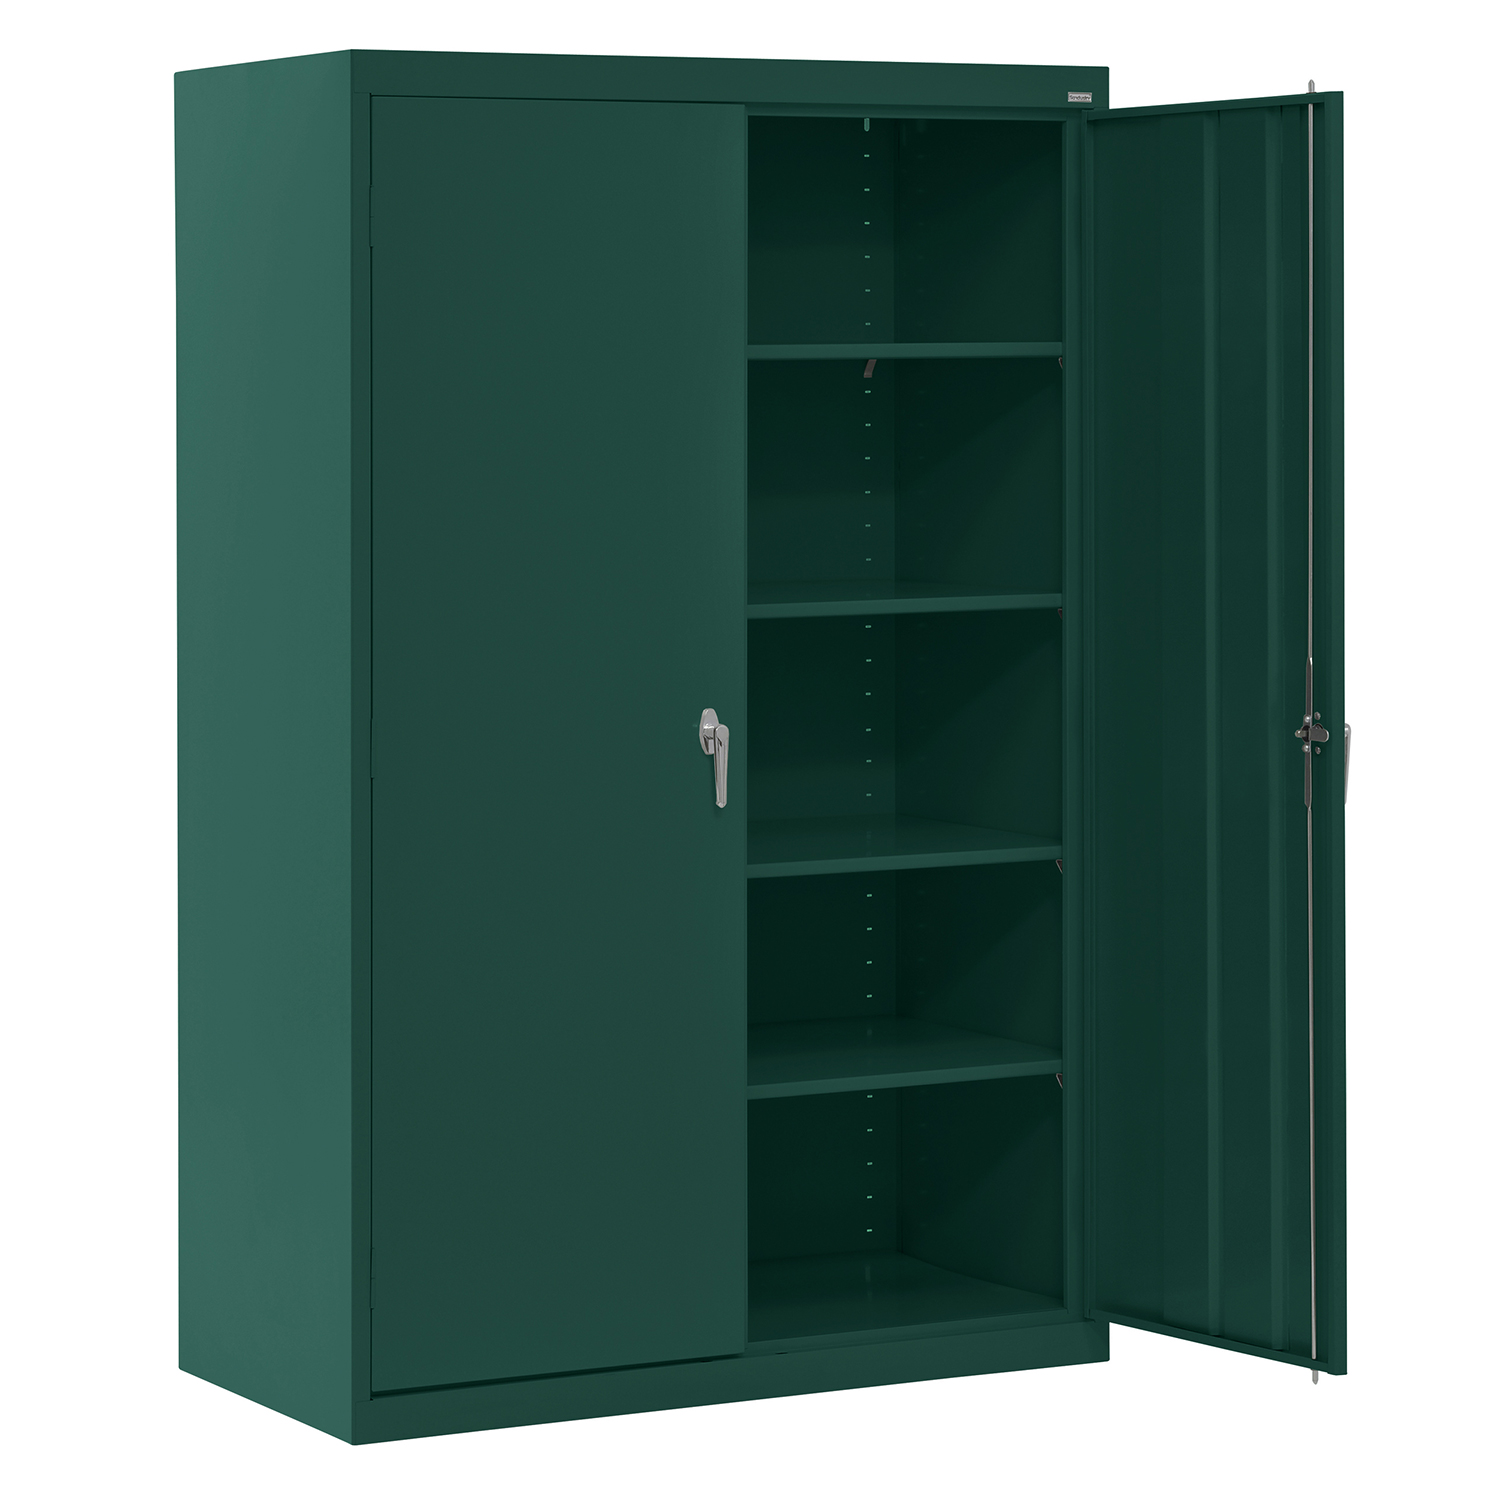 Sandusky Lee 46"W x 24"D x 72"H Locking 5-Shelf Steel Storage Cabinet with Swing Handle, Forest Green - image 1 of 3